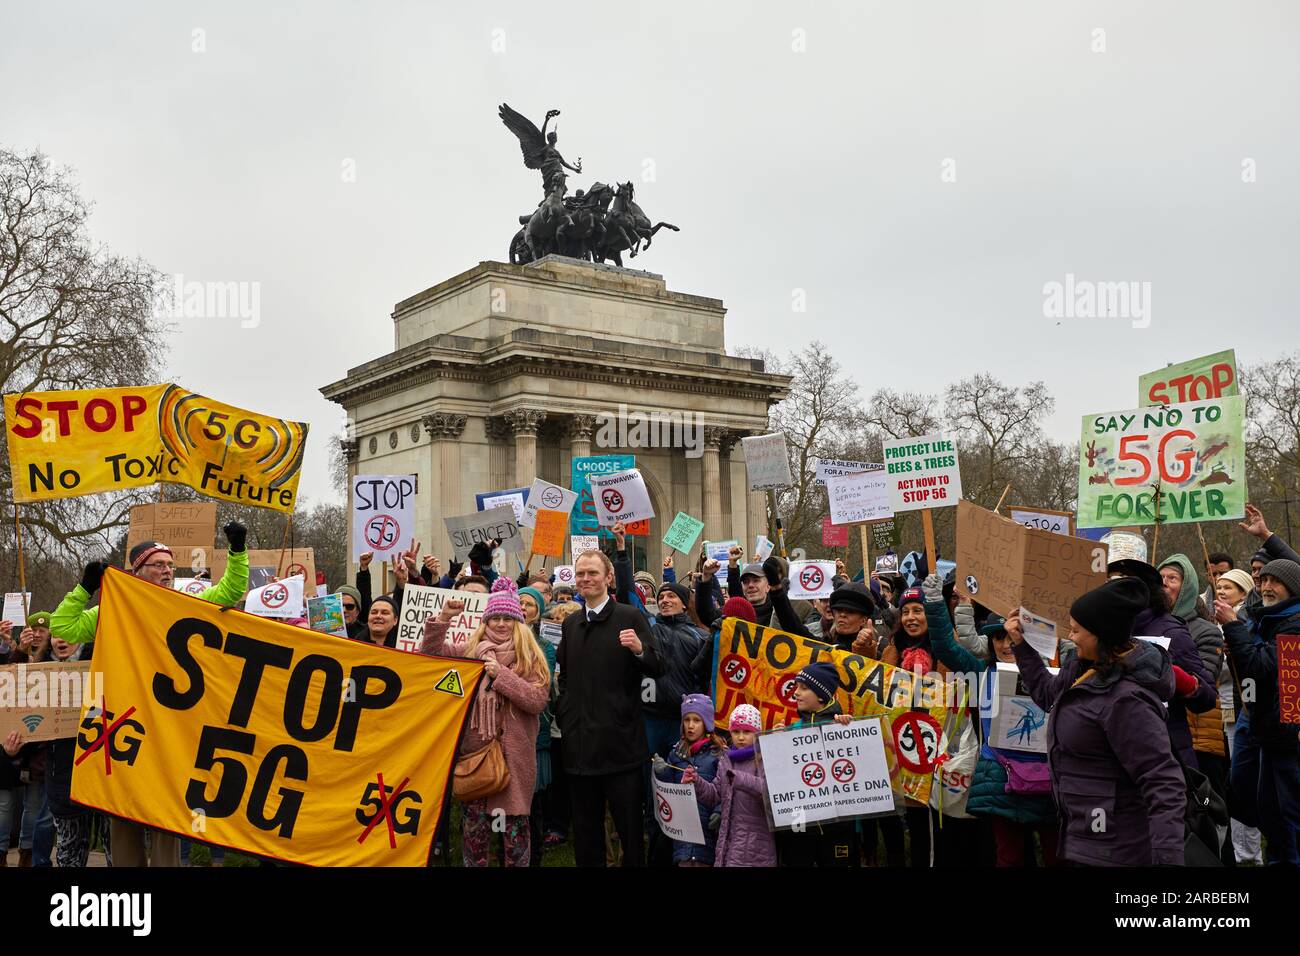 London, U.K. - Jan  25, 2020: Demonstrators gather at Hyde Park Corner calling for a halt to the introduction of 5G technology. Stock Photo